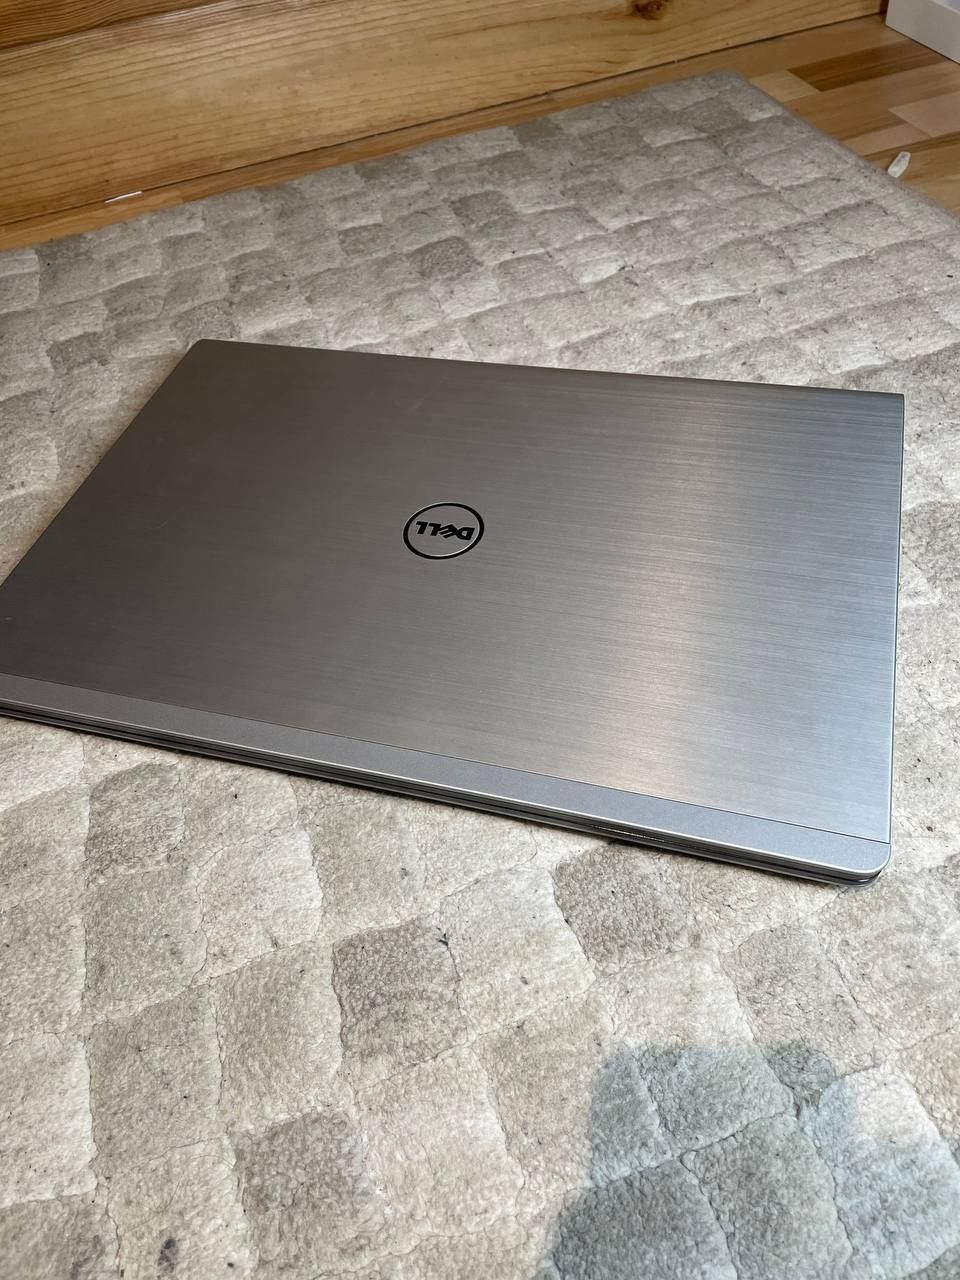 Продам ноутбук Dell inspiron 17 5000